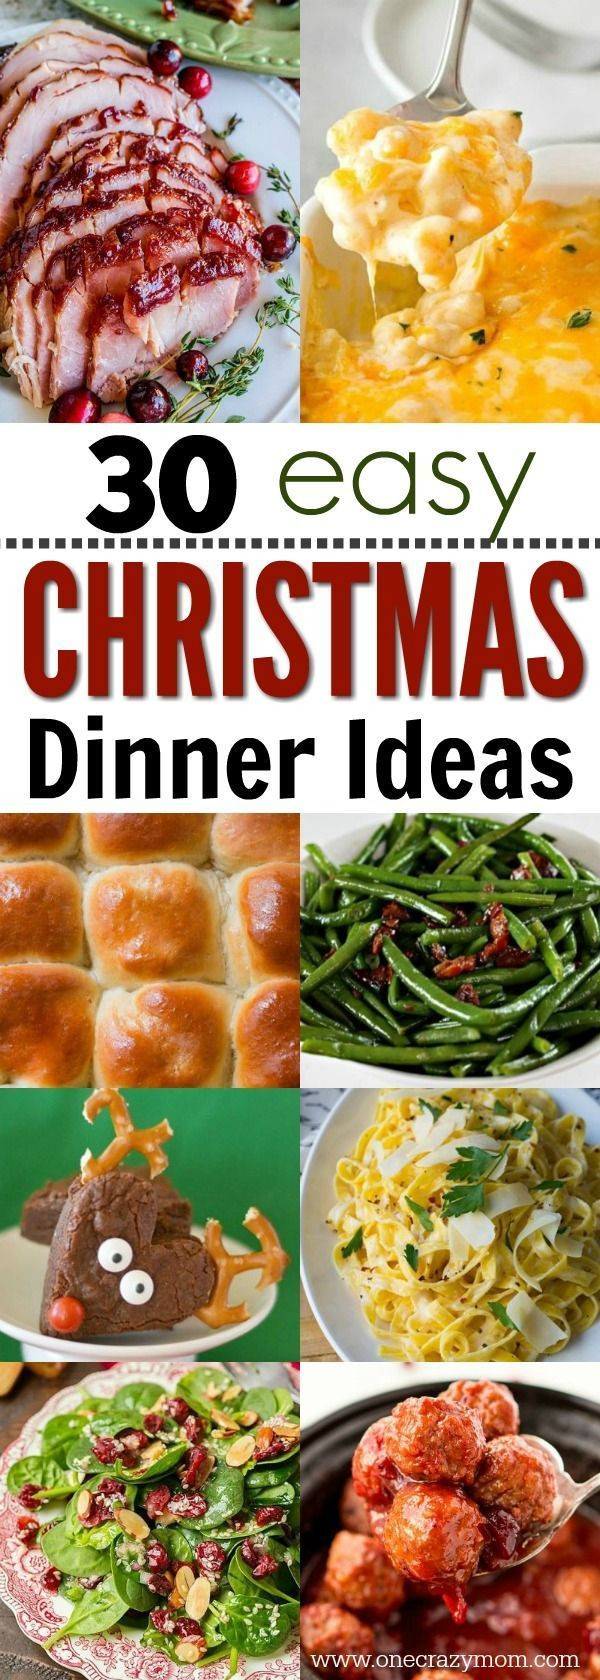 Dinner Party Menu Ideas For 6
 Christmas Dinner Ideas 30 Christmas Menu Ideas